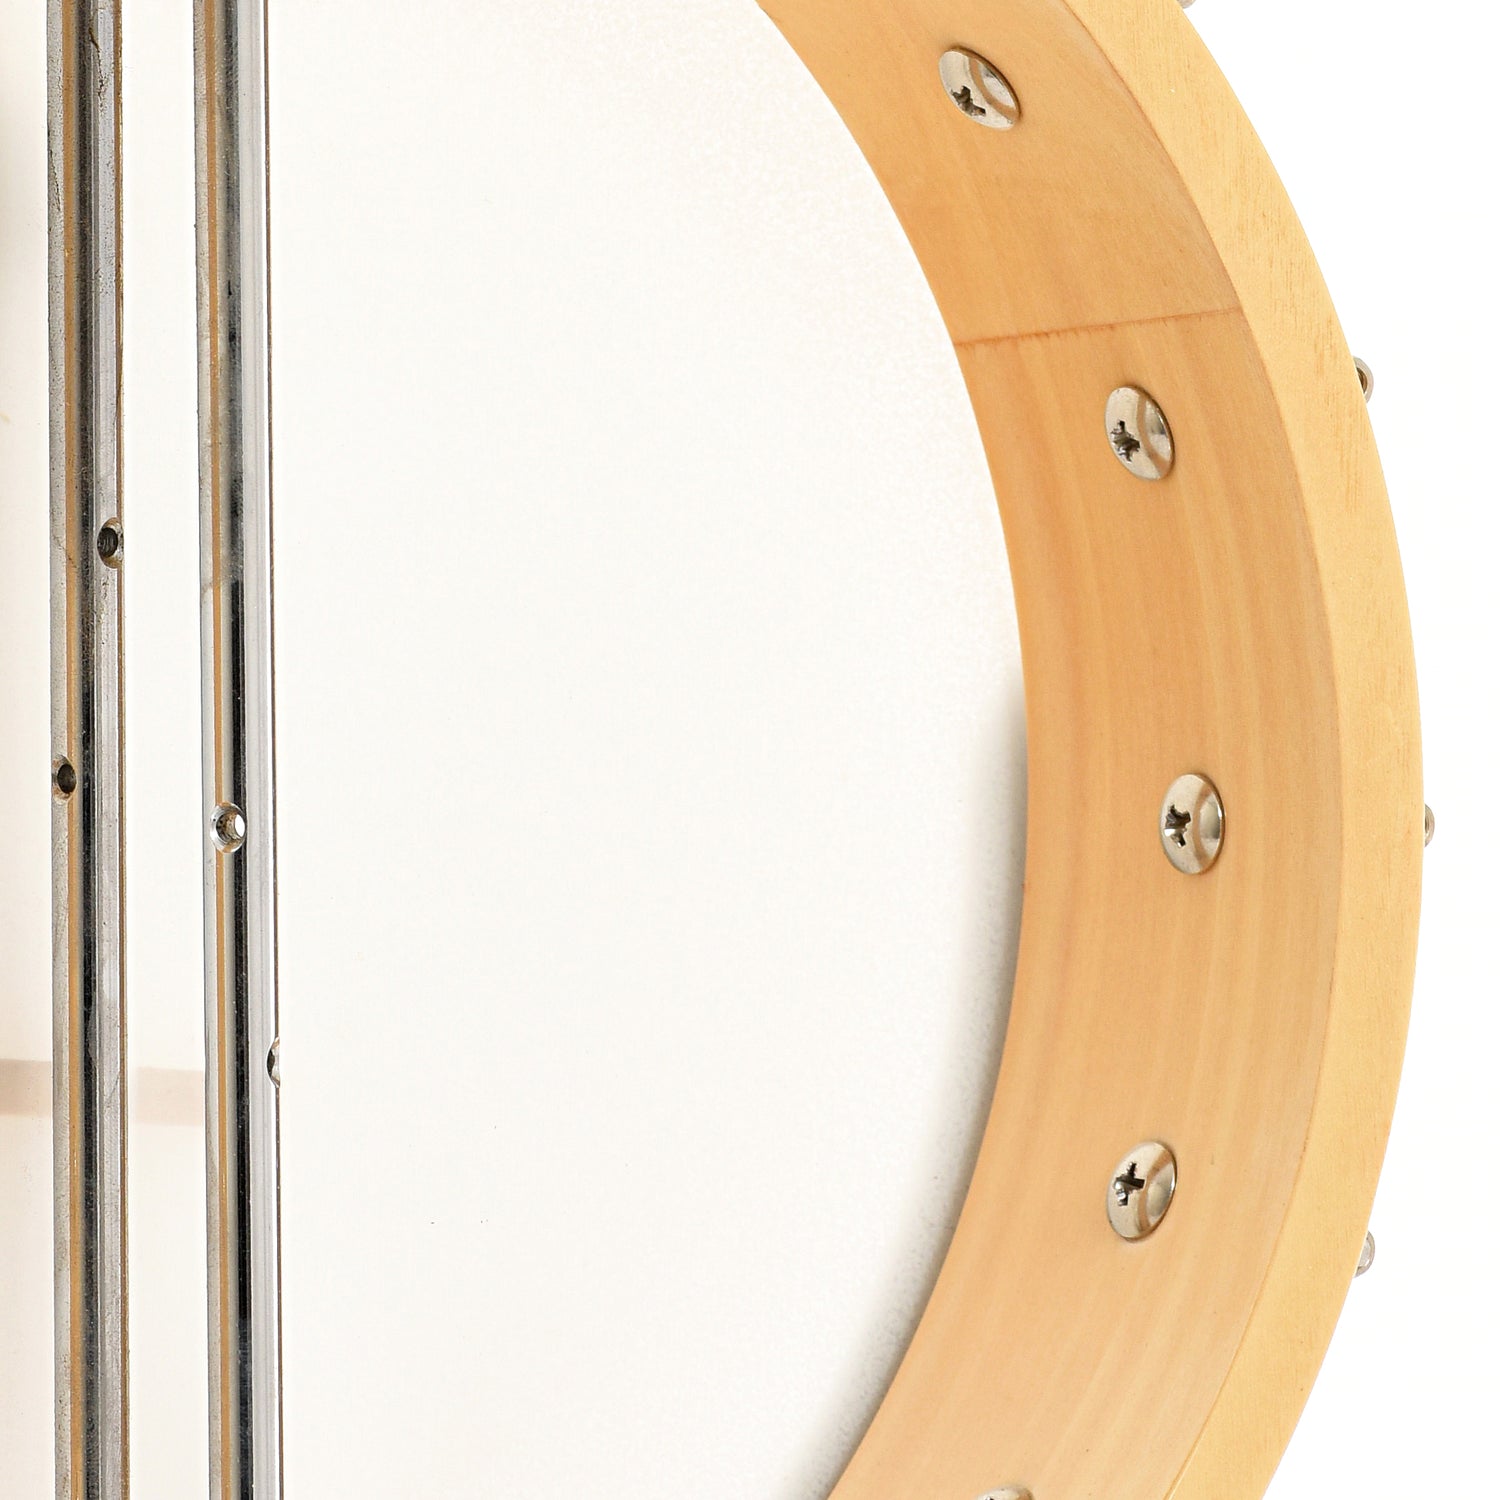 Inside rim of Gold Tone CC Plectrum Banjo